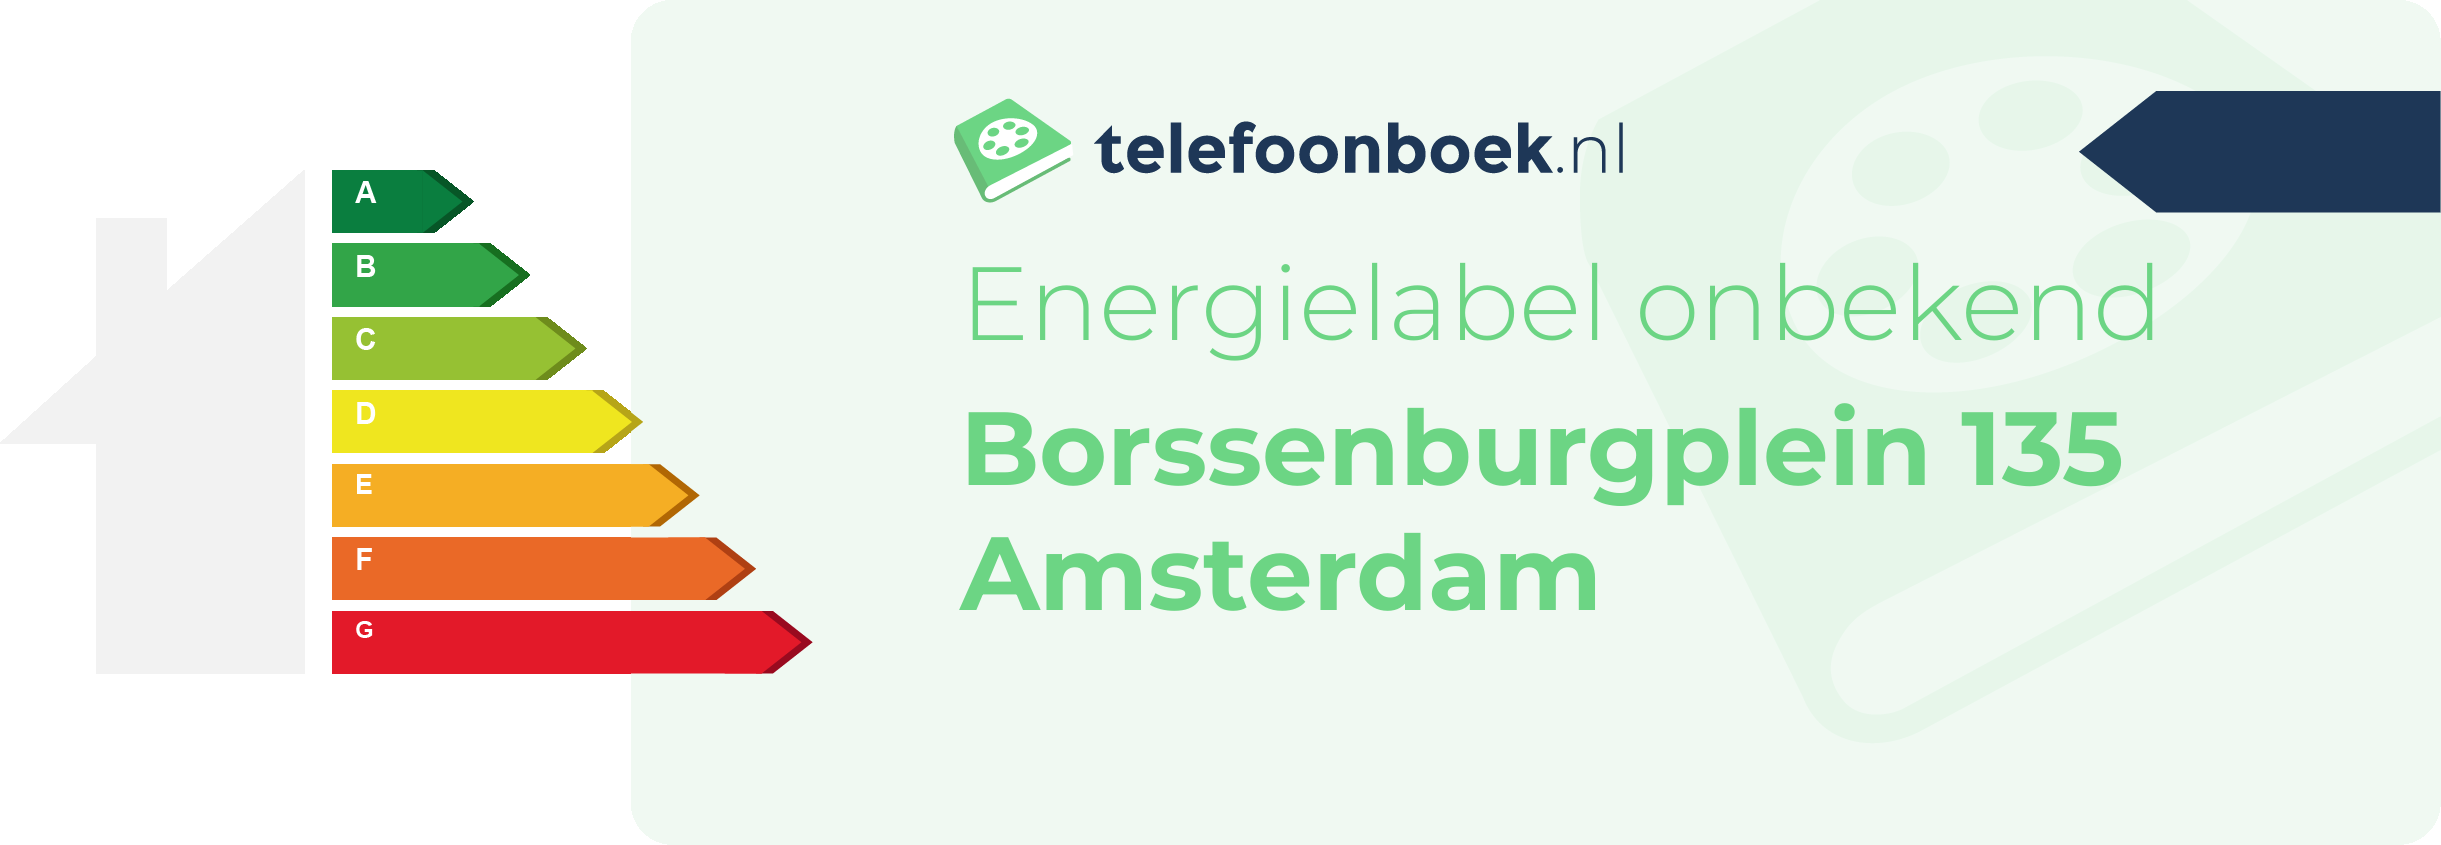 Energielabel Borssenburgplein 135 Amsterdam